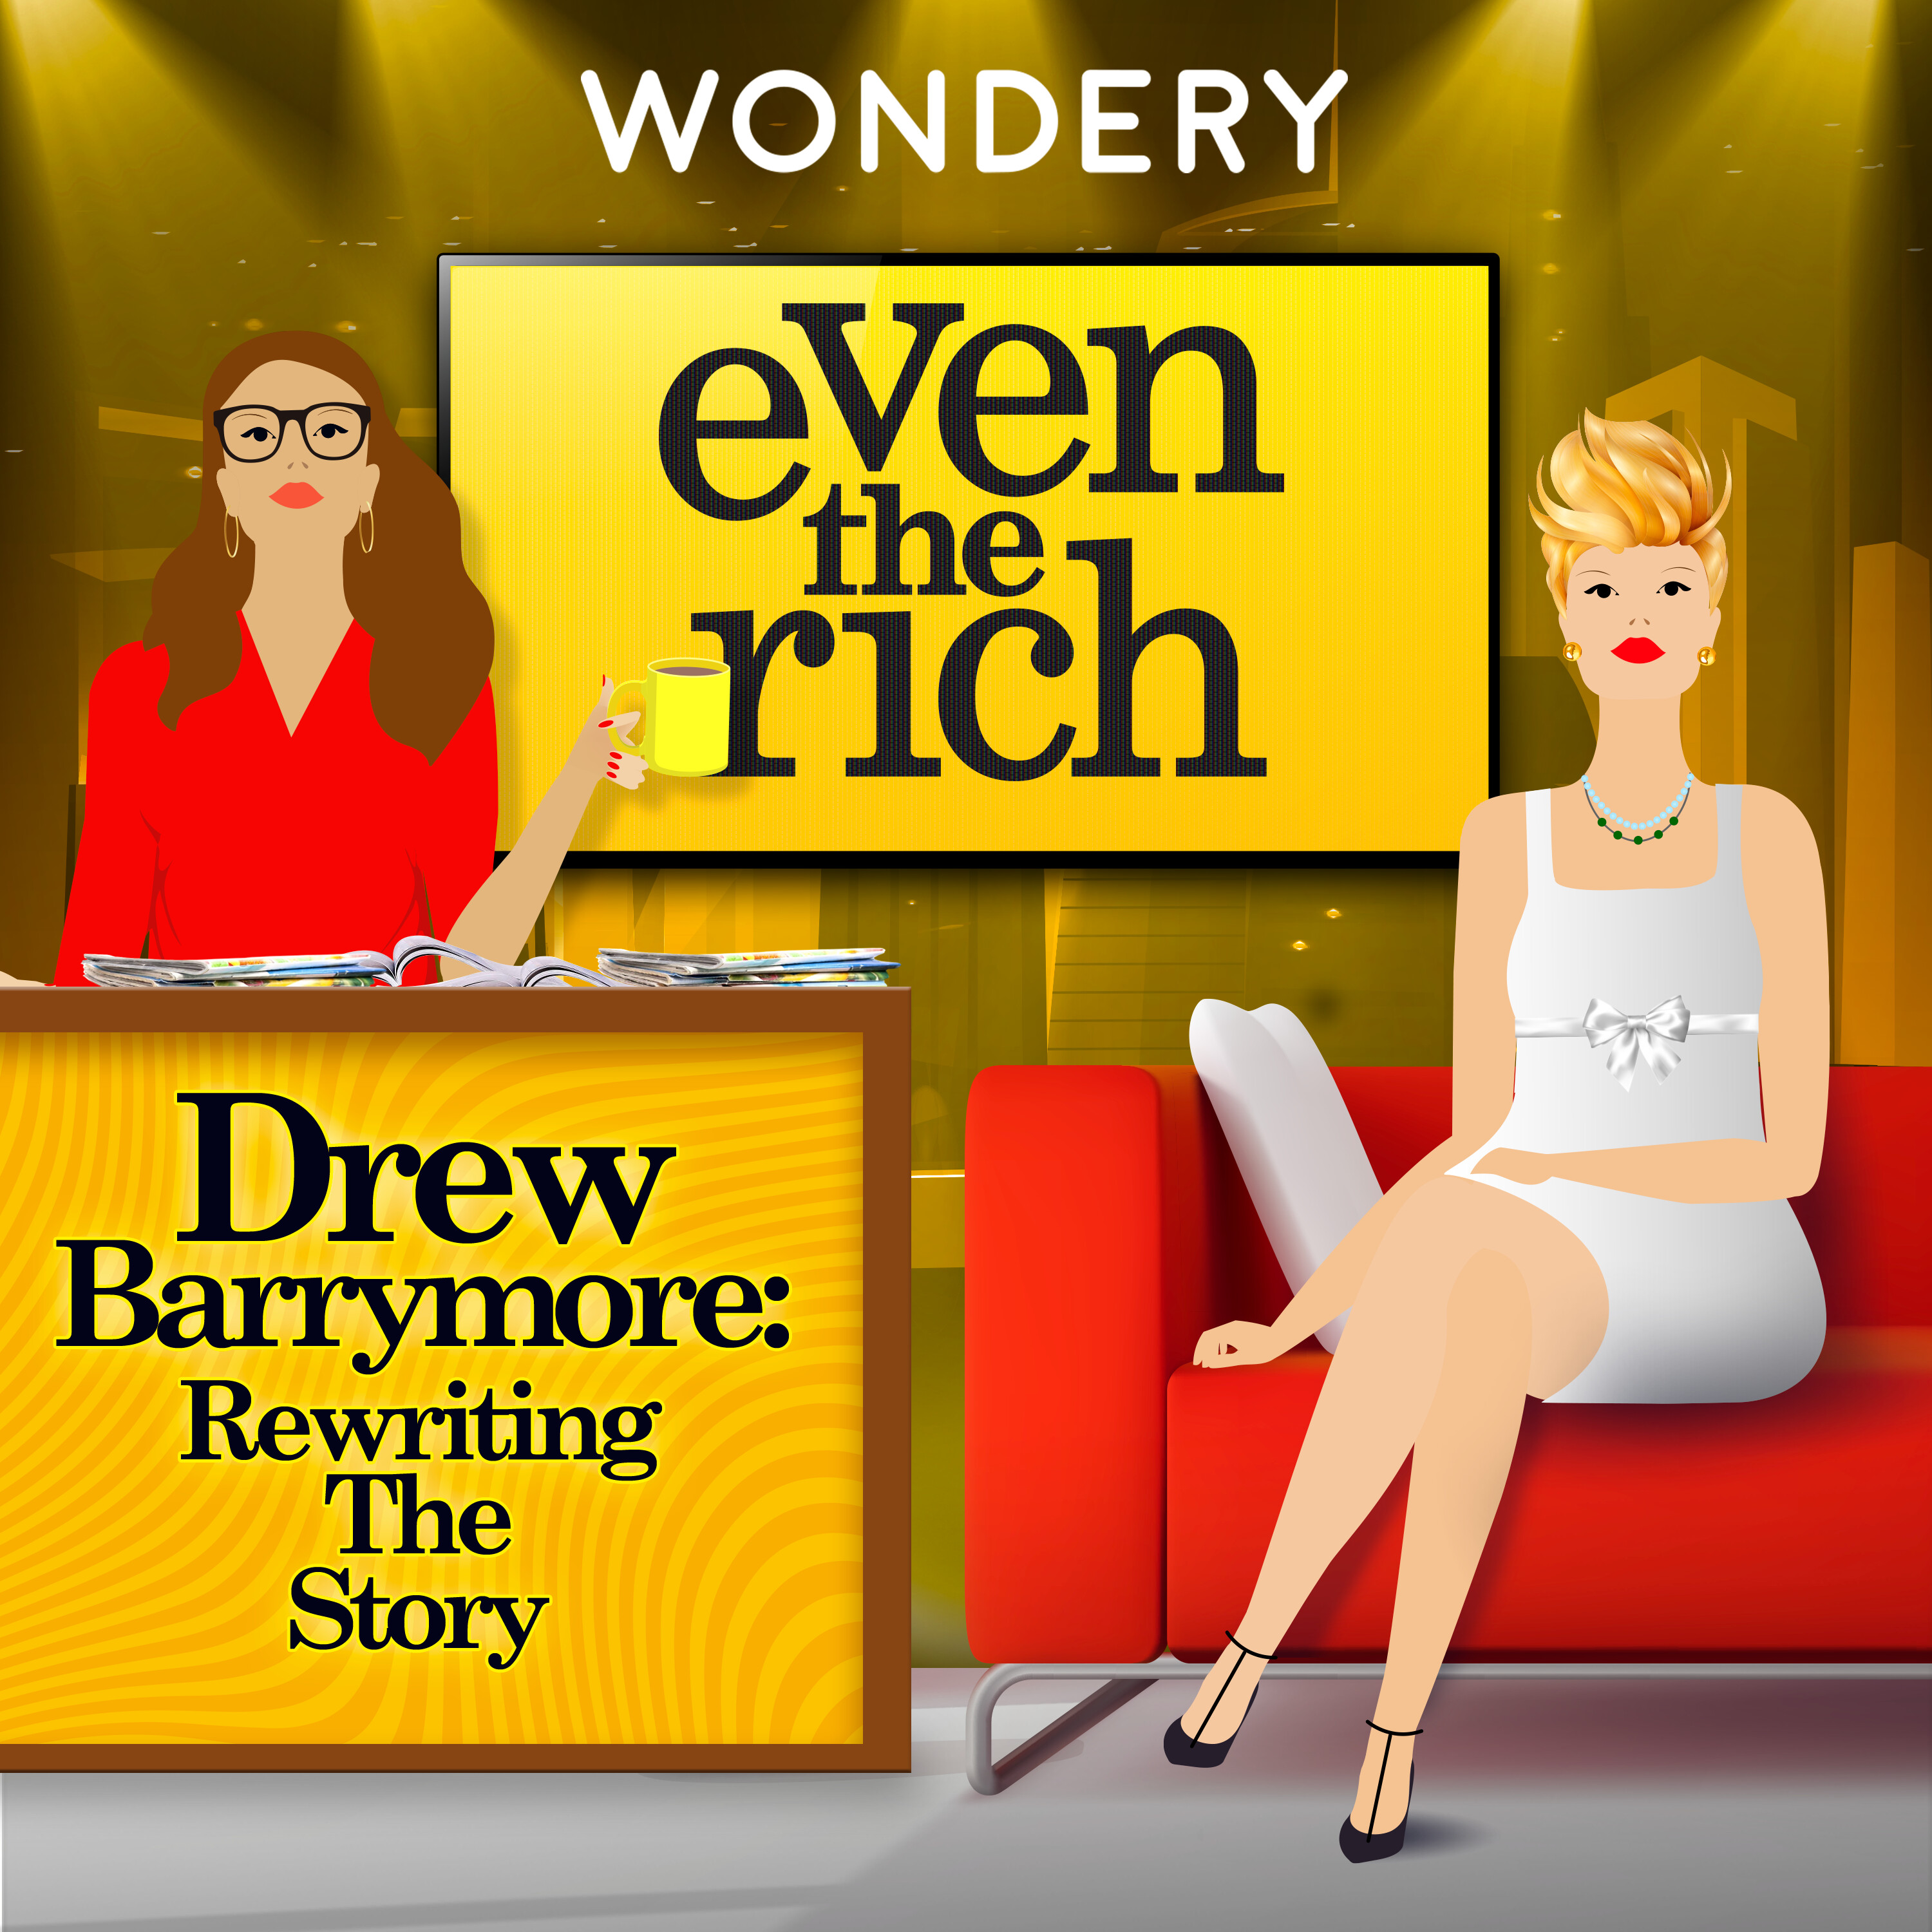 Drew Barrymore: Rewriting The Story | Wishful Thinking | 2